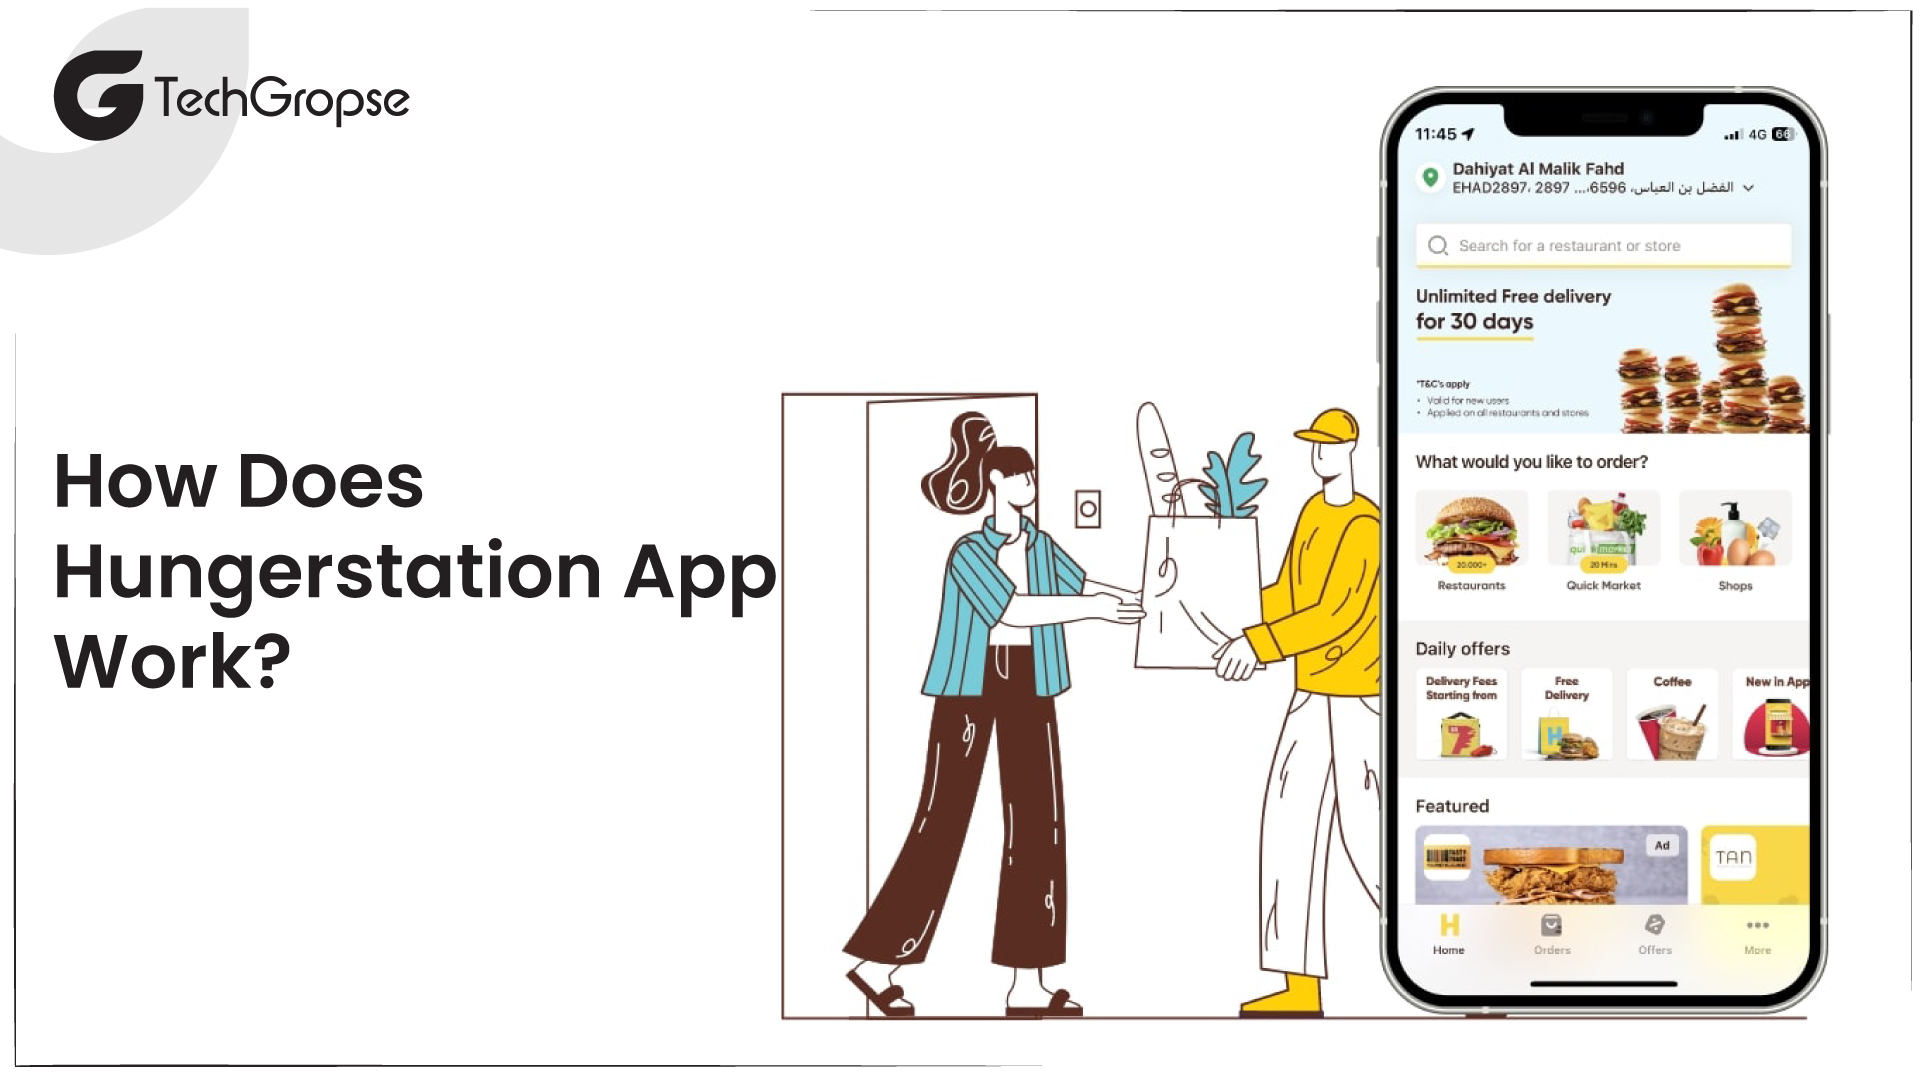 How Does Hungerstation App Work?